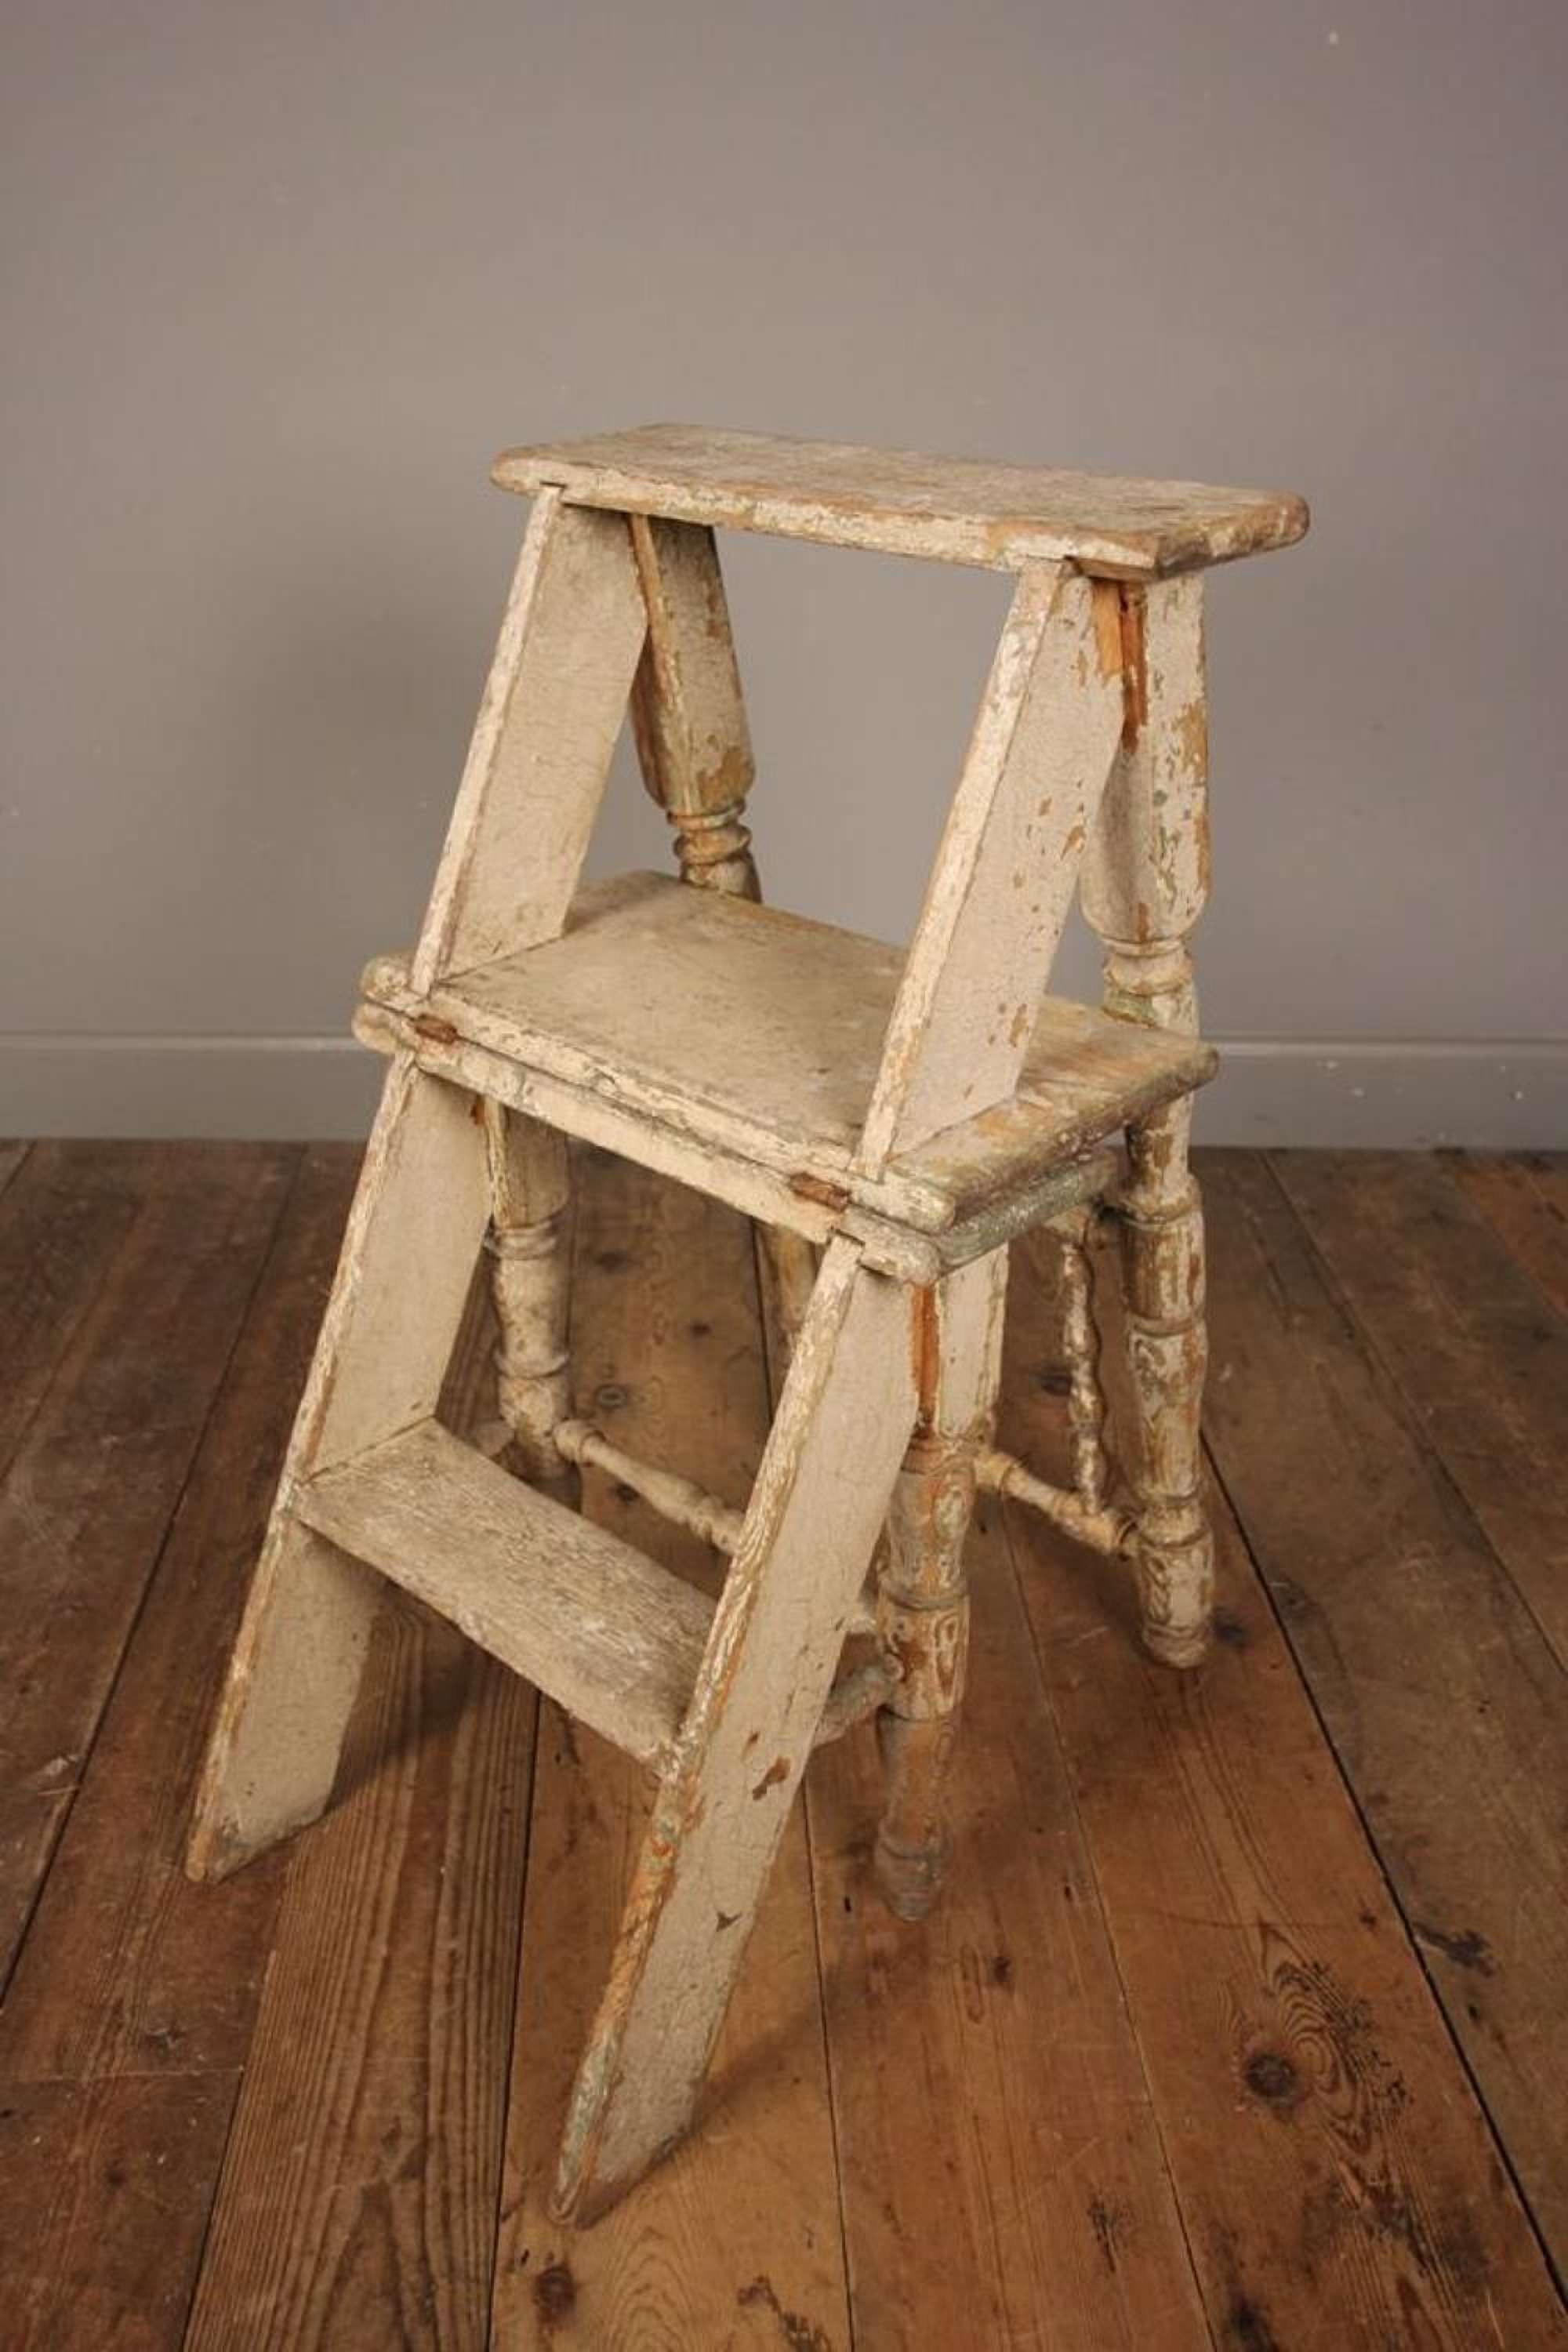 19th Century Metamorphic Chair in wonderful original paint